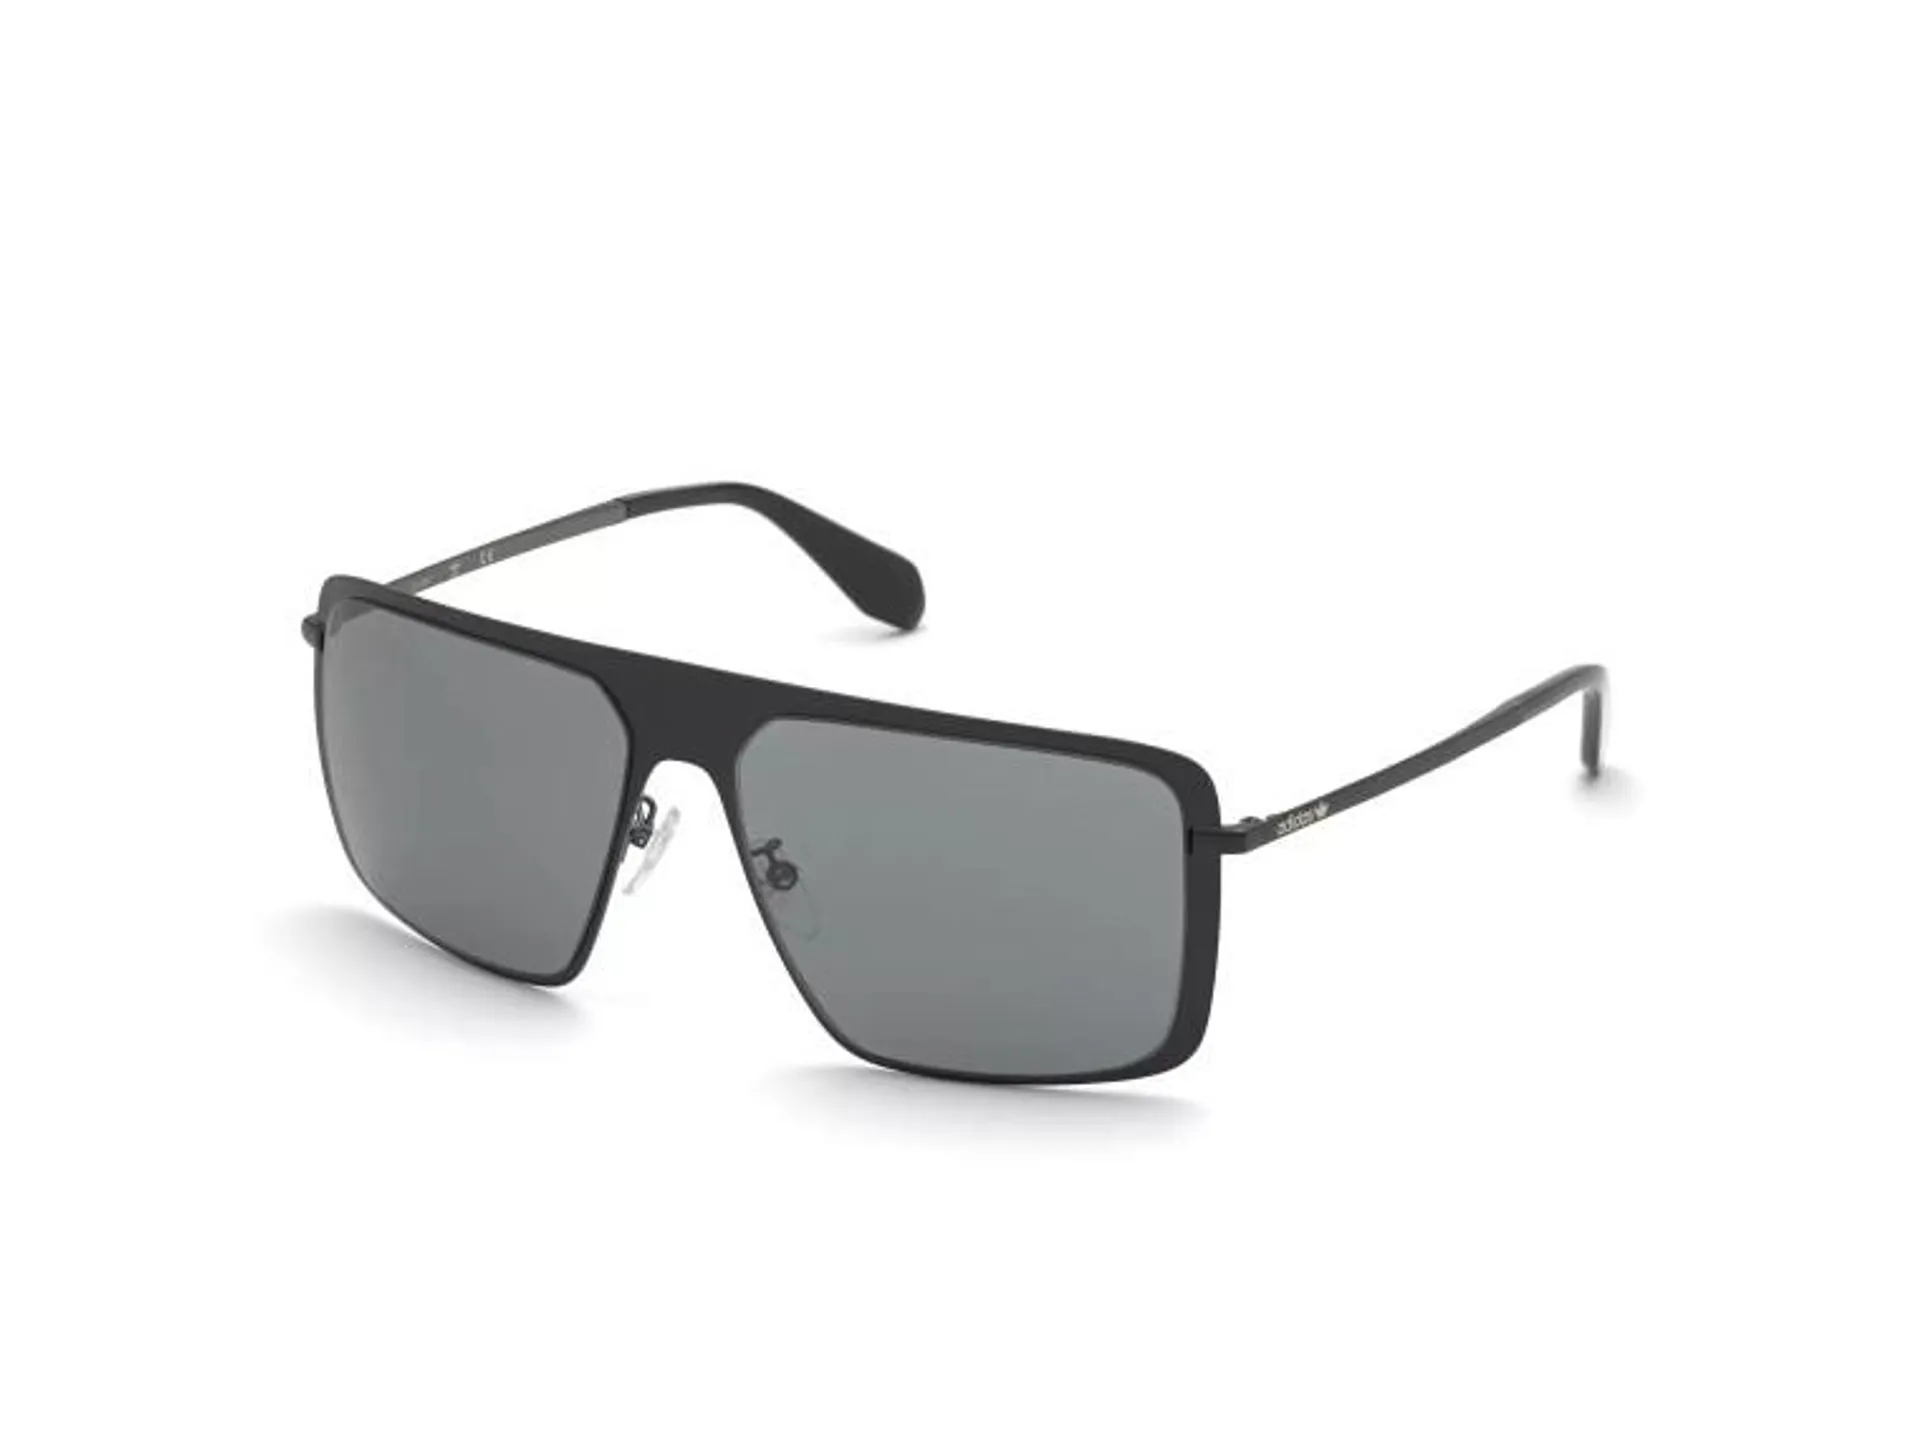 Adidas Unisex OR0036 Sunglasses Shiny Black/Smoke Mirror